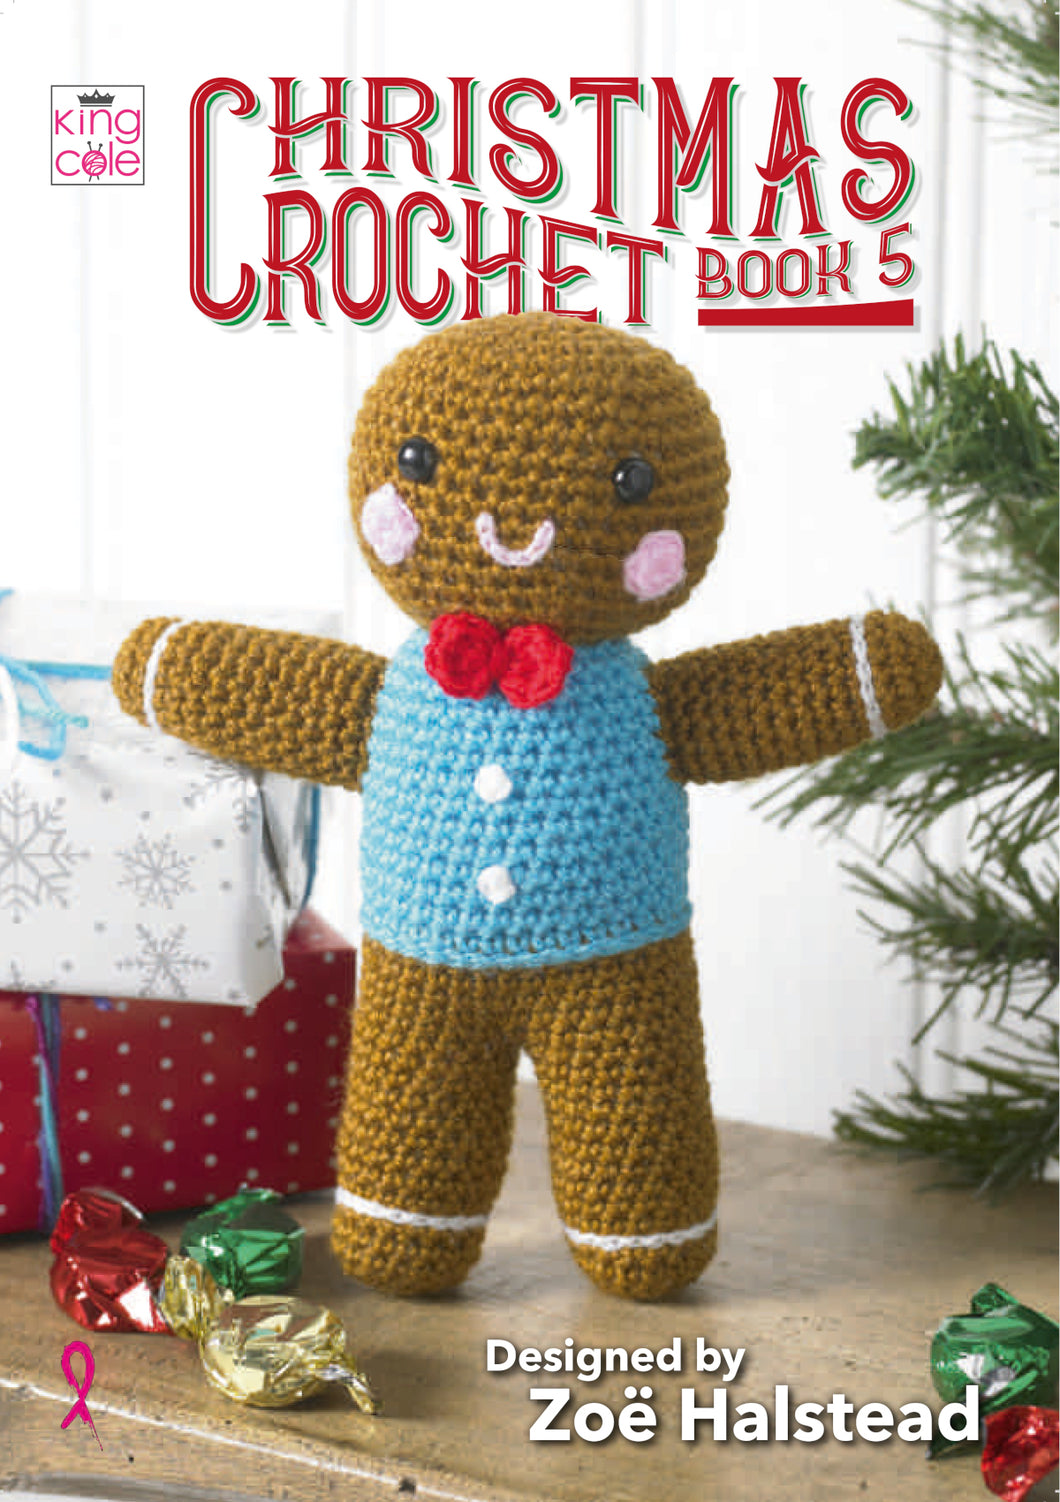 https://images.esellerpro.com/2278/I/180/567/king-cole-christmas-crochet-book-5-image-1.jpg